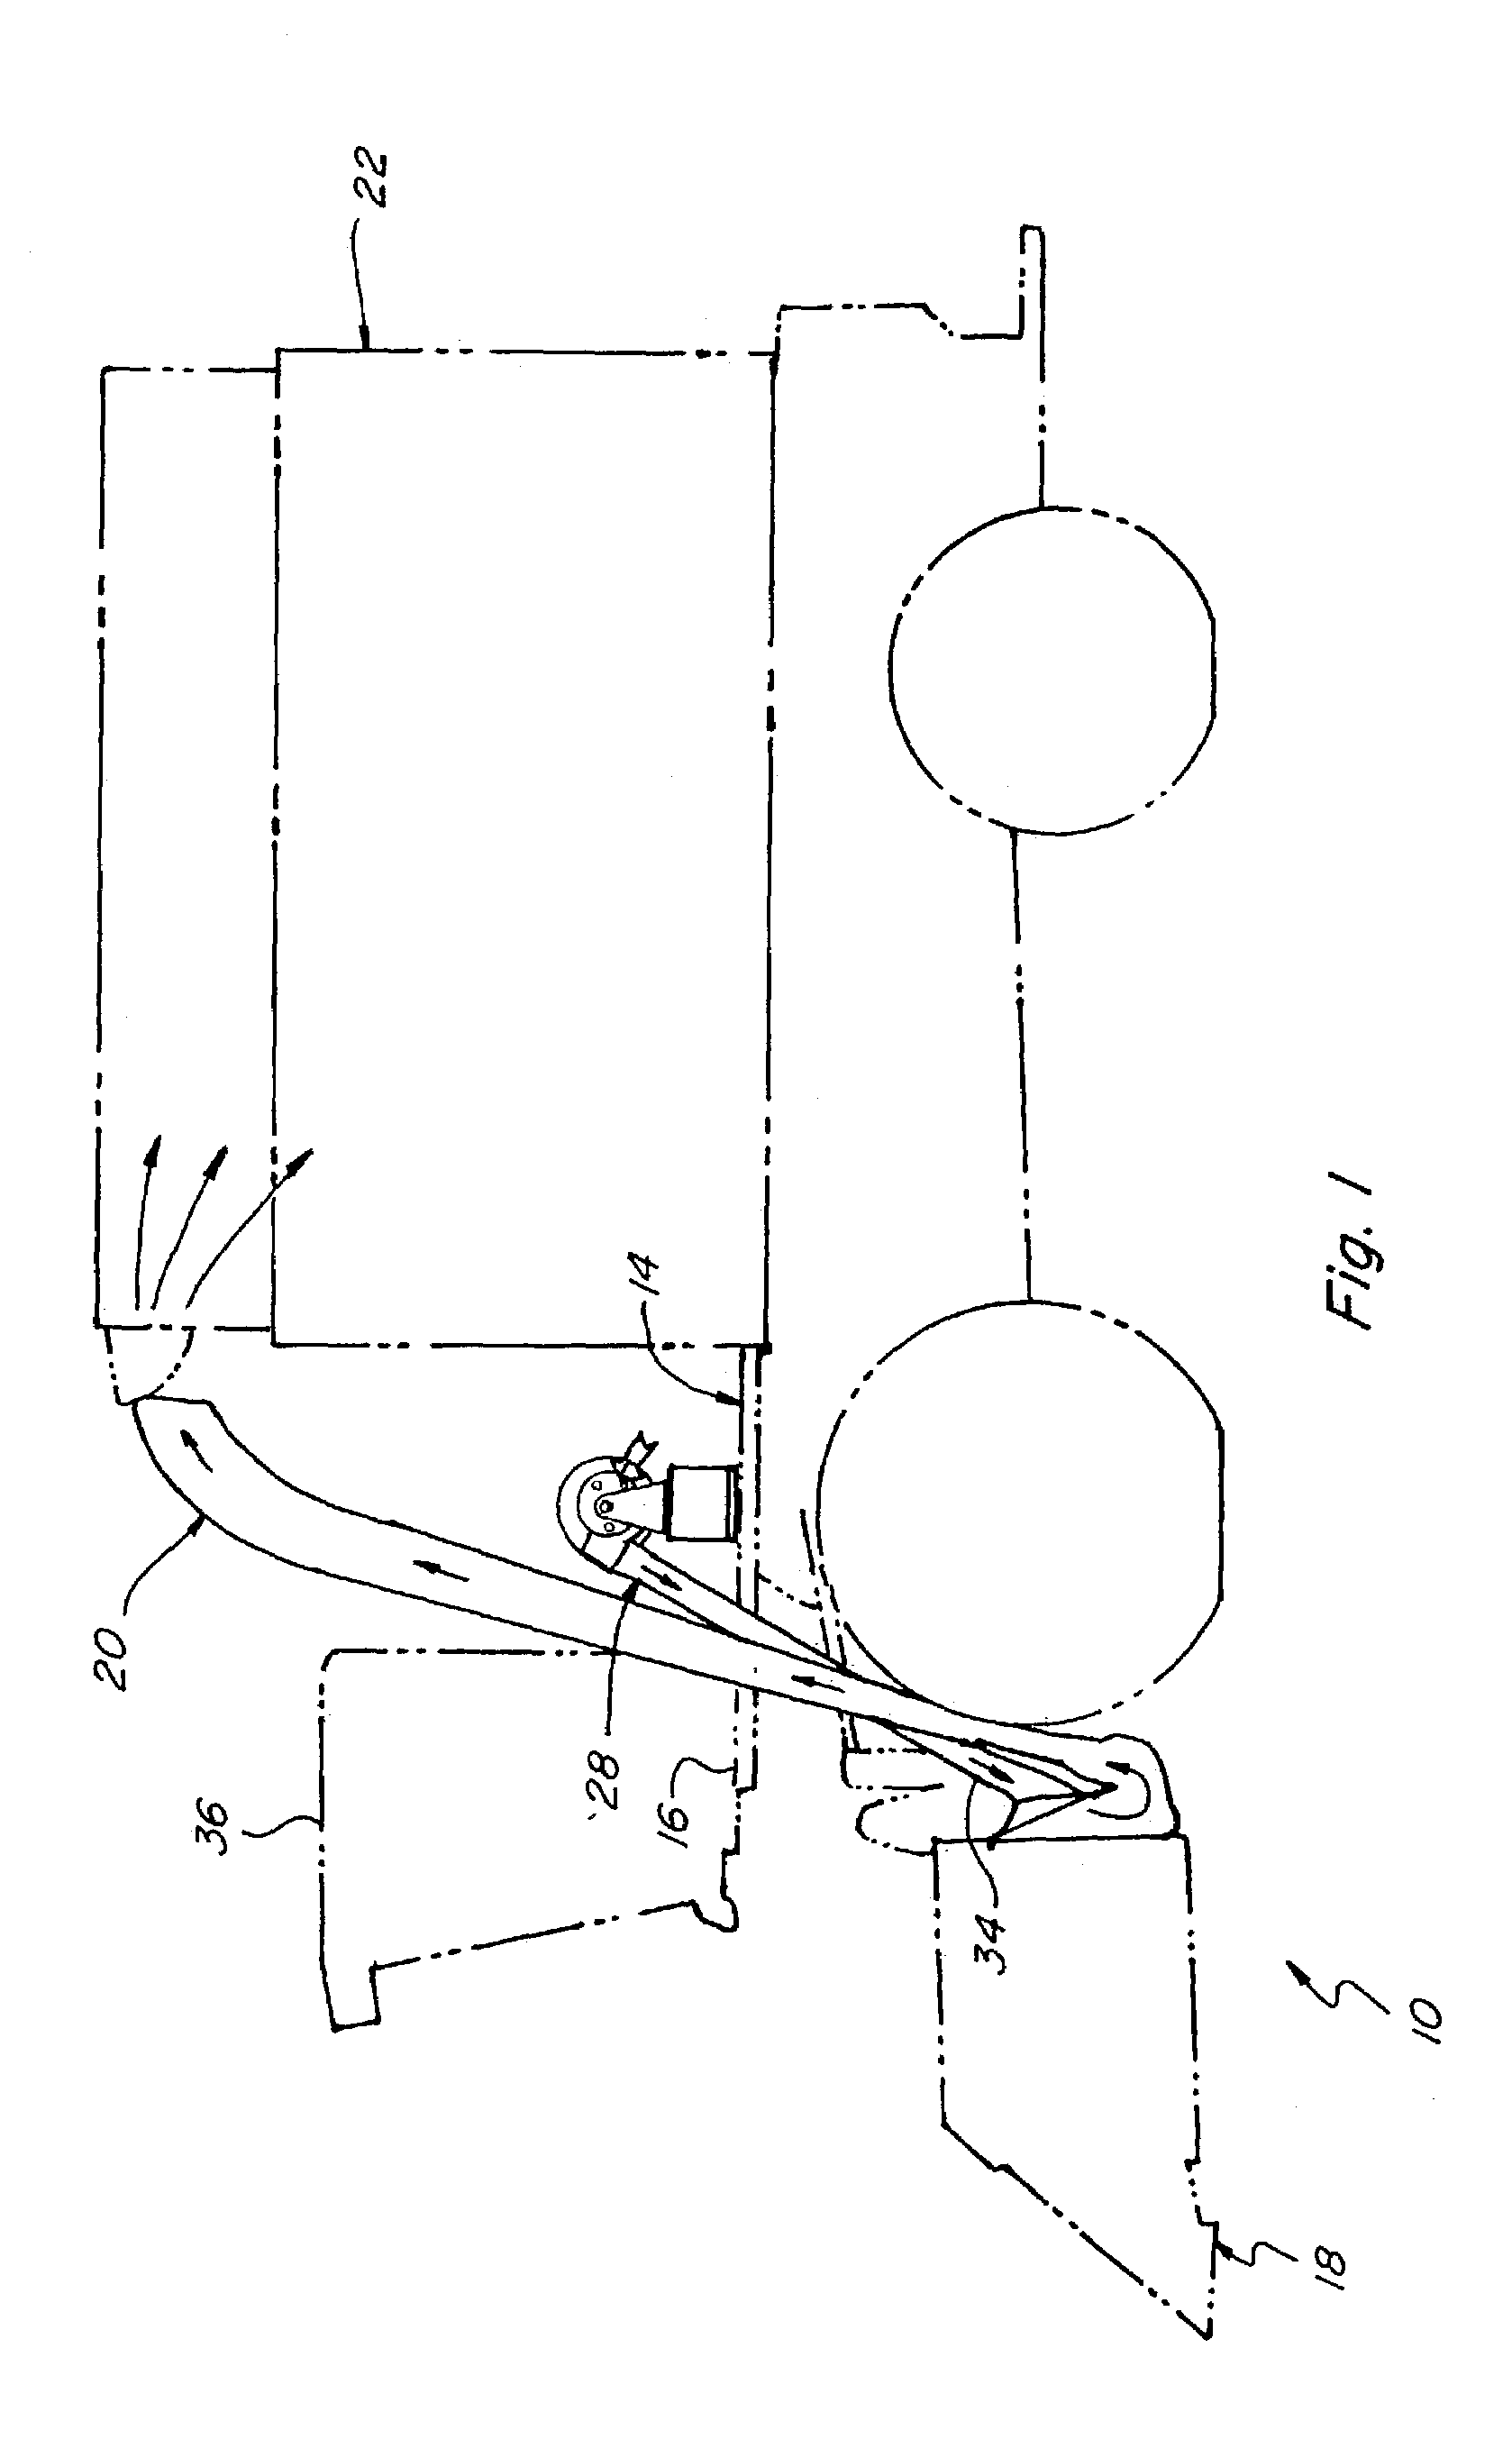 Multi-rotor fan assembly for a cotton picker